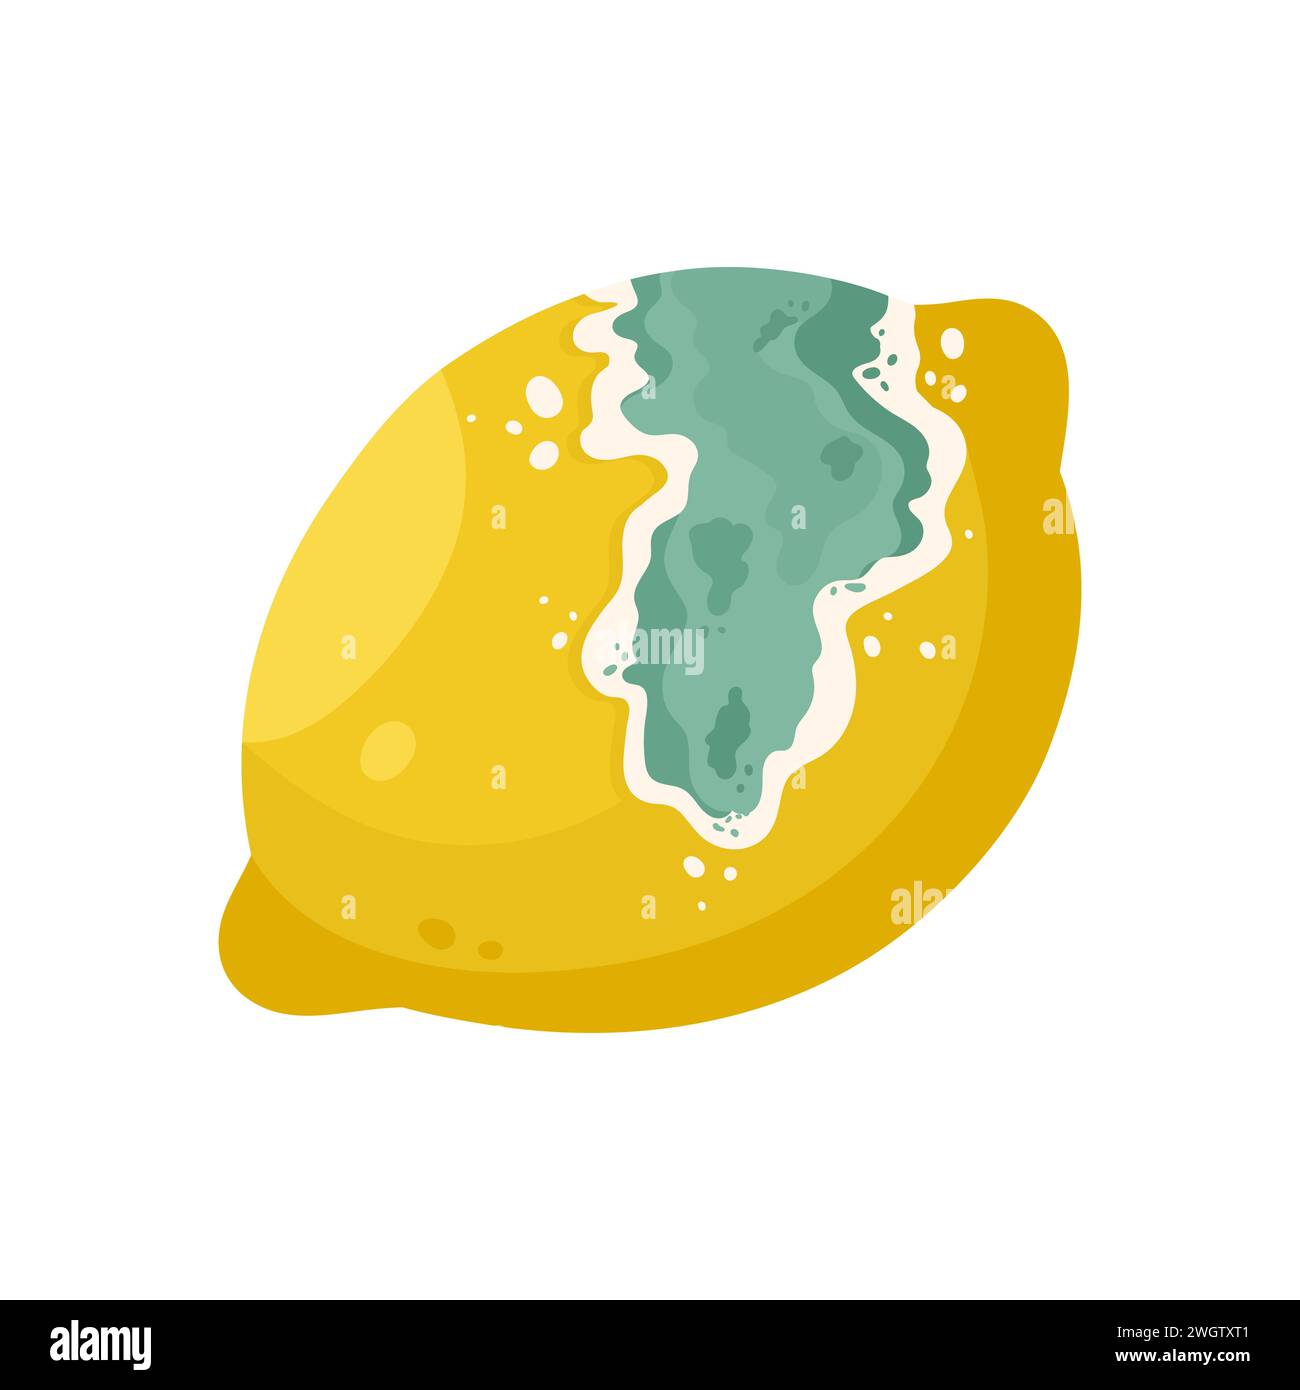 Rotten lemon fruit. Bad unhealthy food from kitchen, moldy expired product cartoon vector illustration Stock Vector